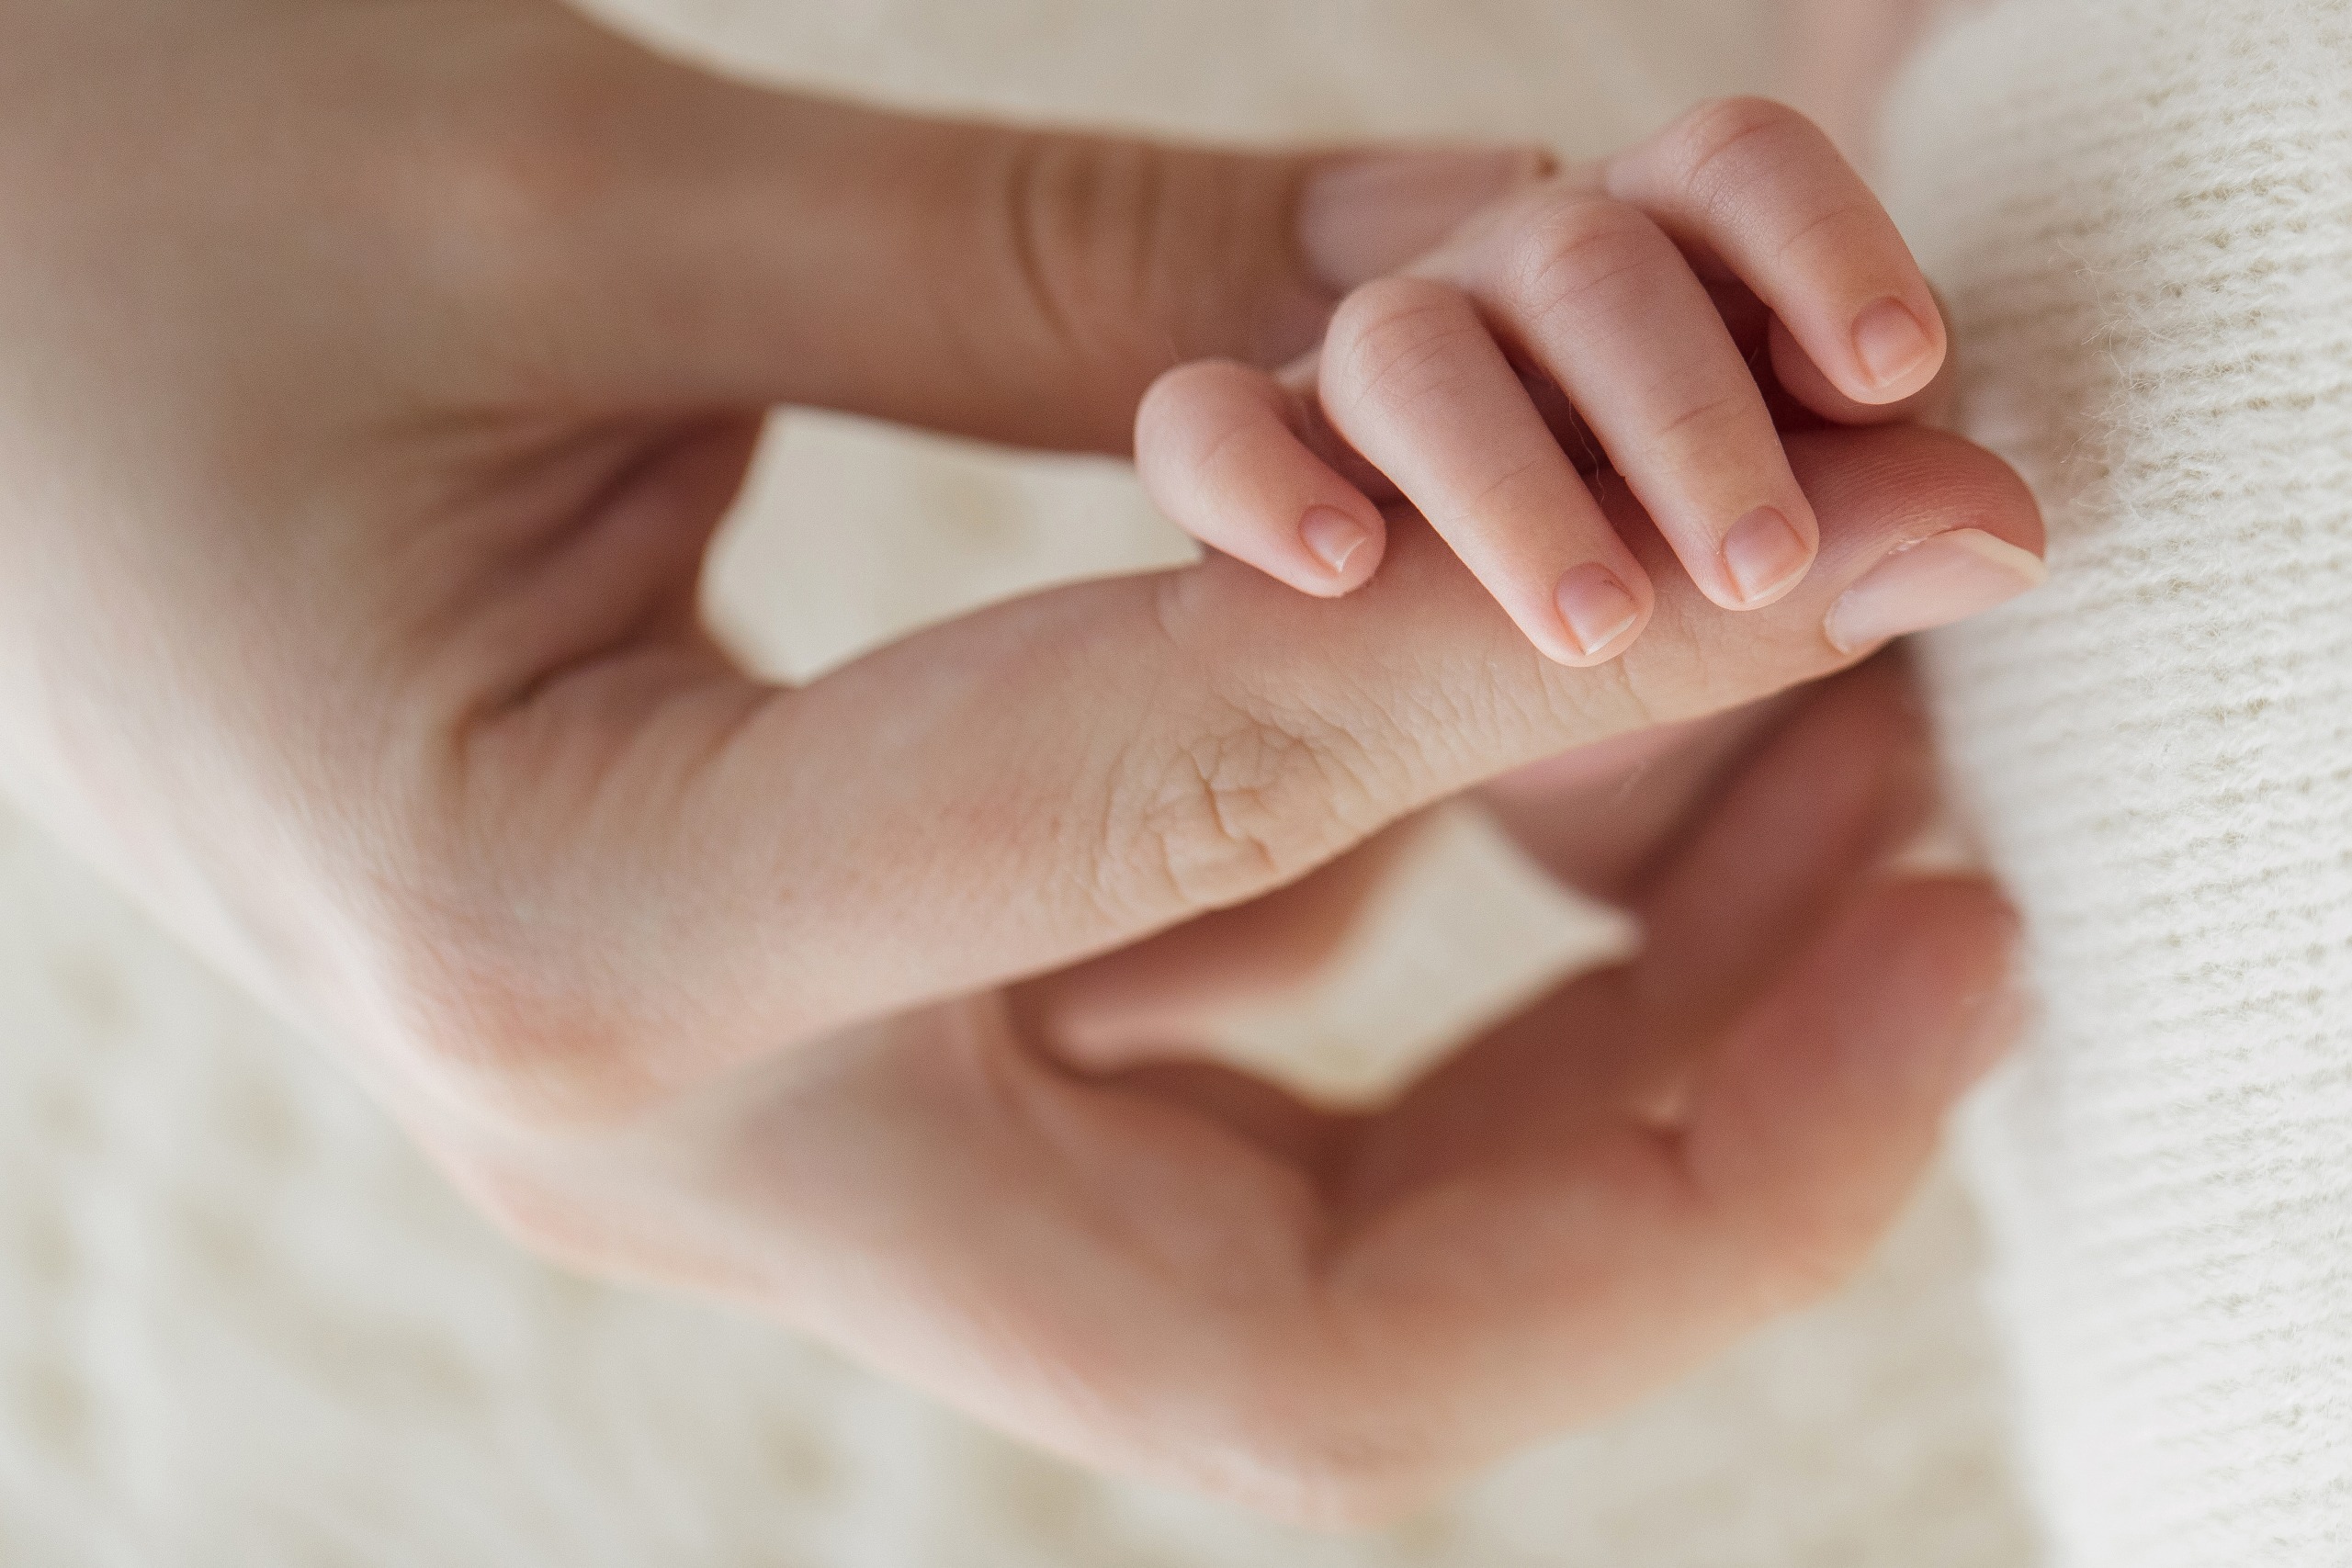 Detailfotografie neugeborenes Baby